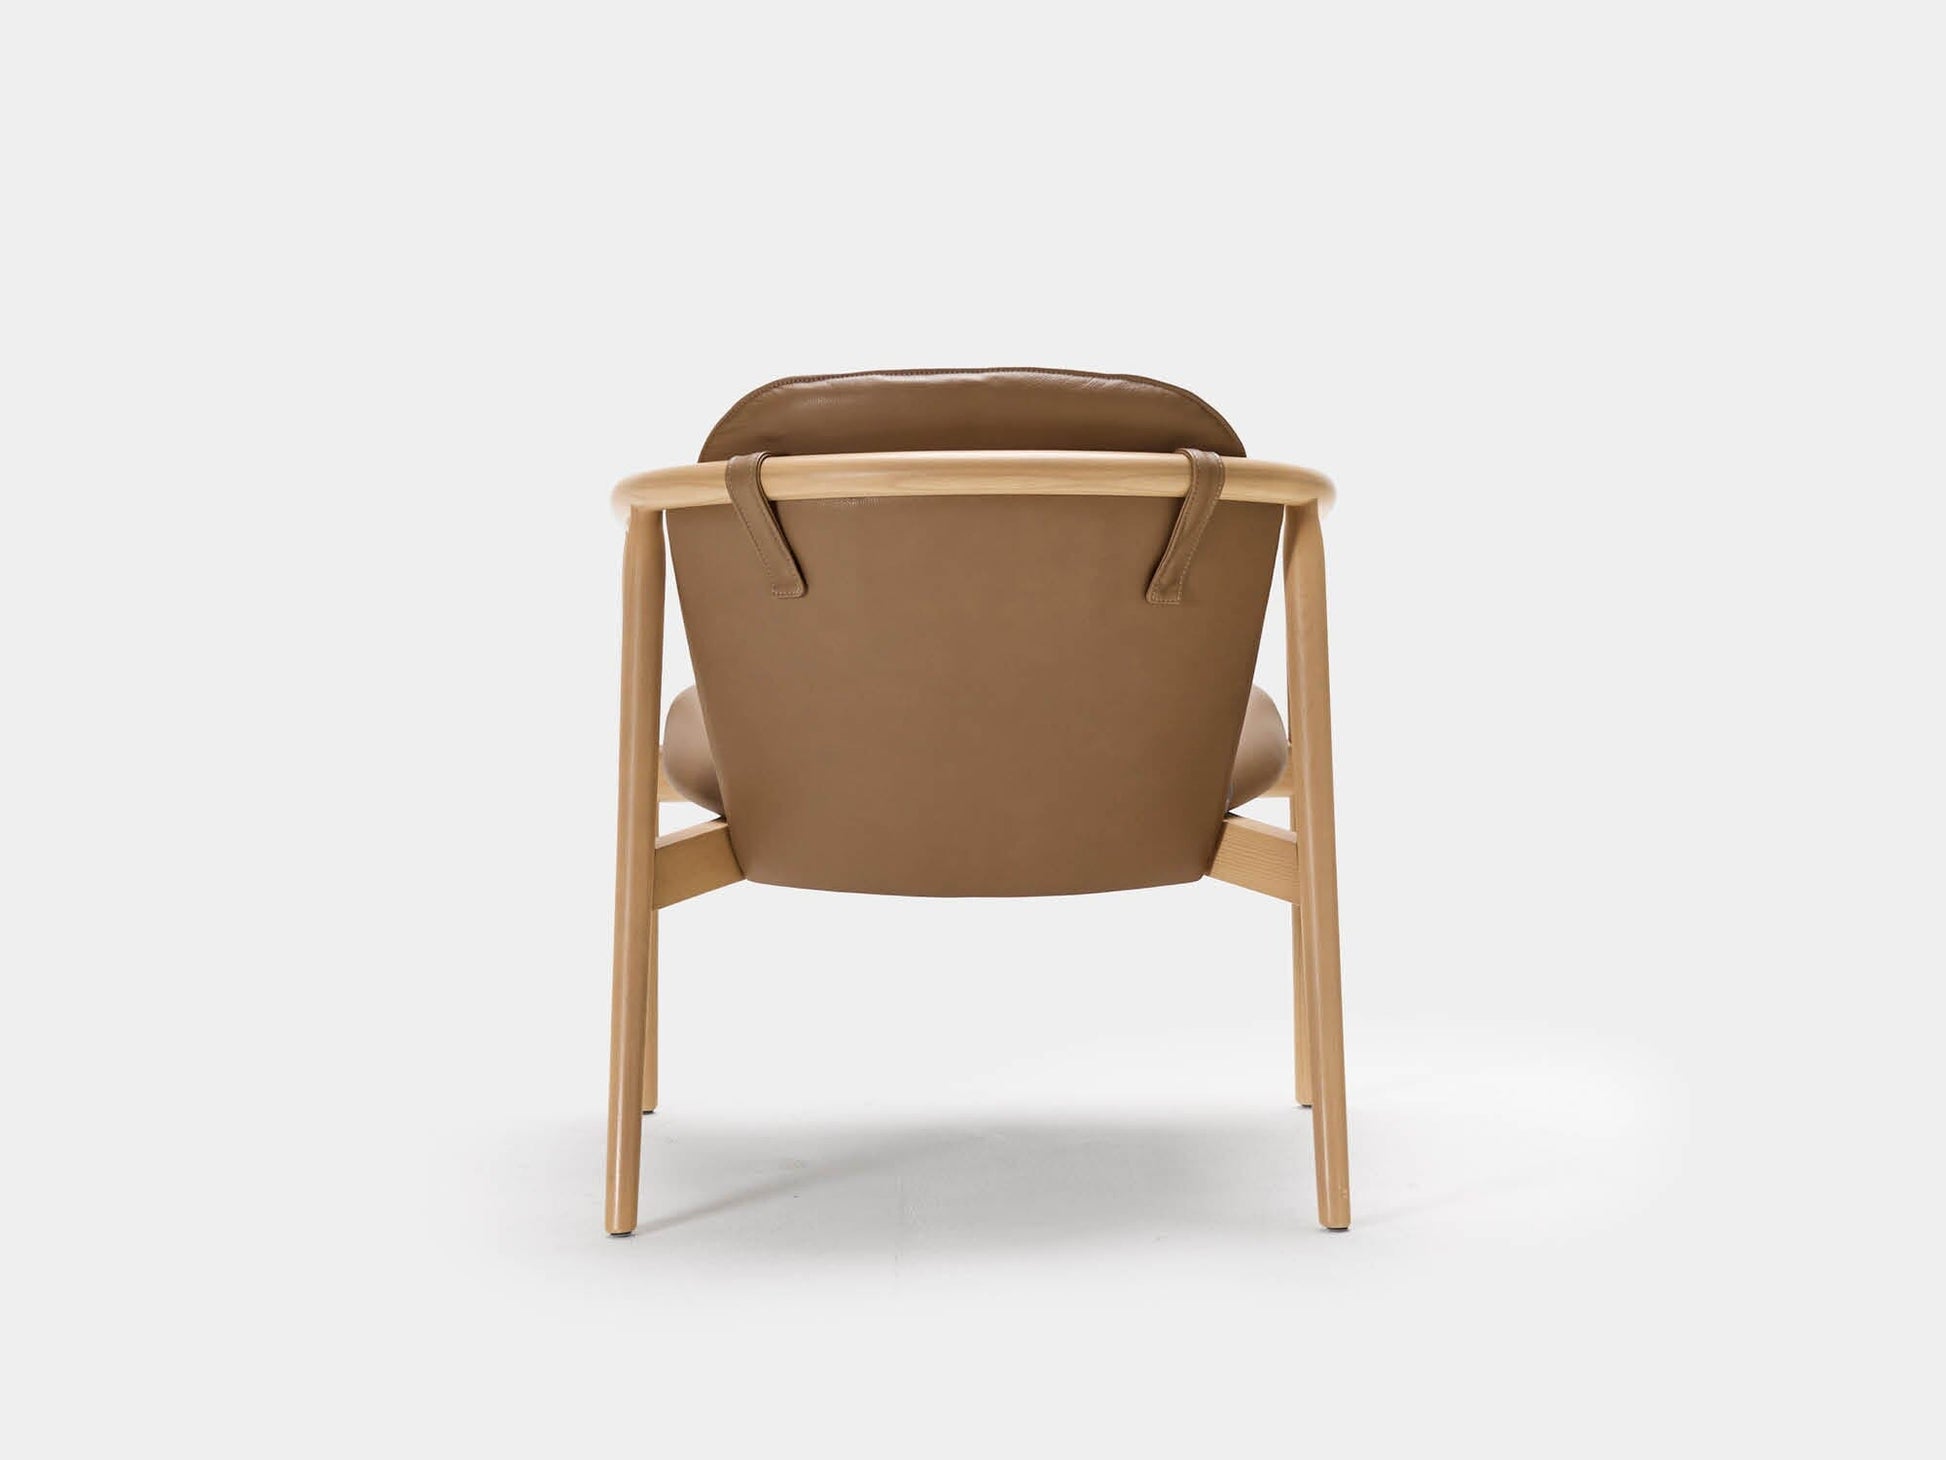 Otway Leather Lounge Chair 15% Off Indoor Furniture Kett 